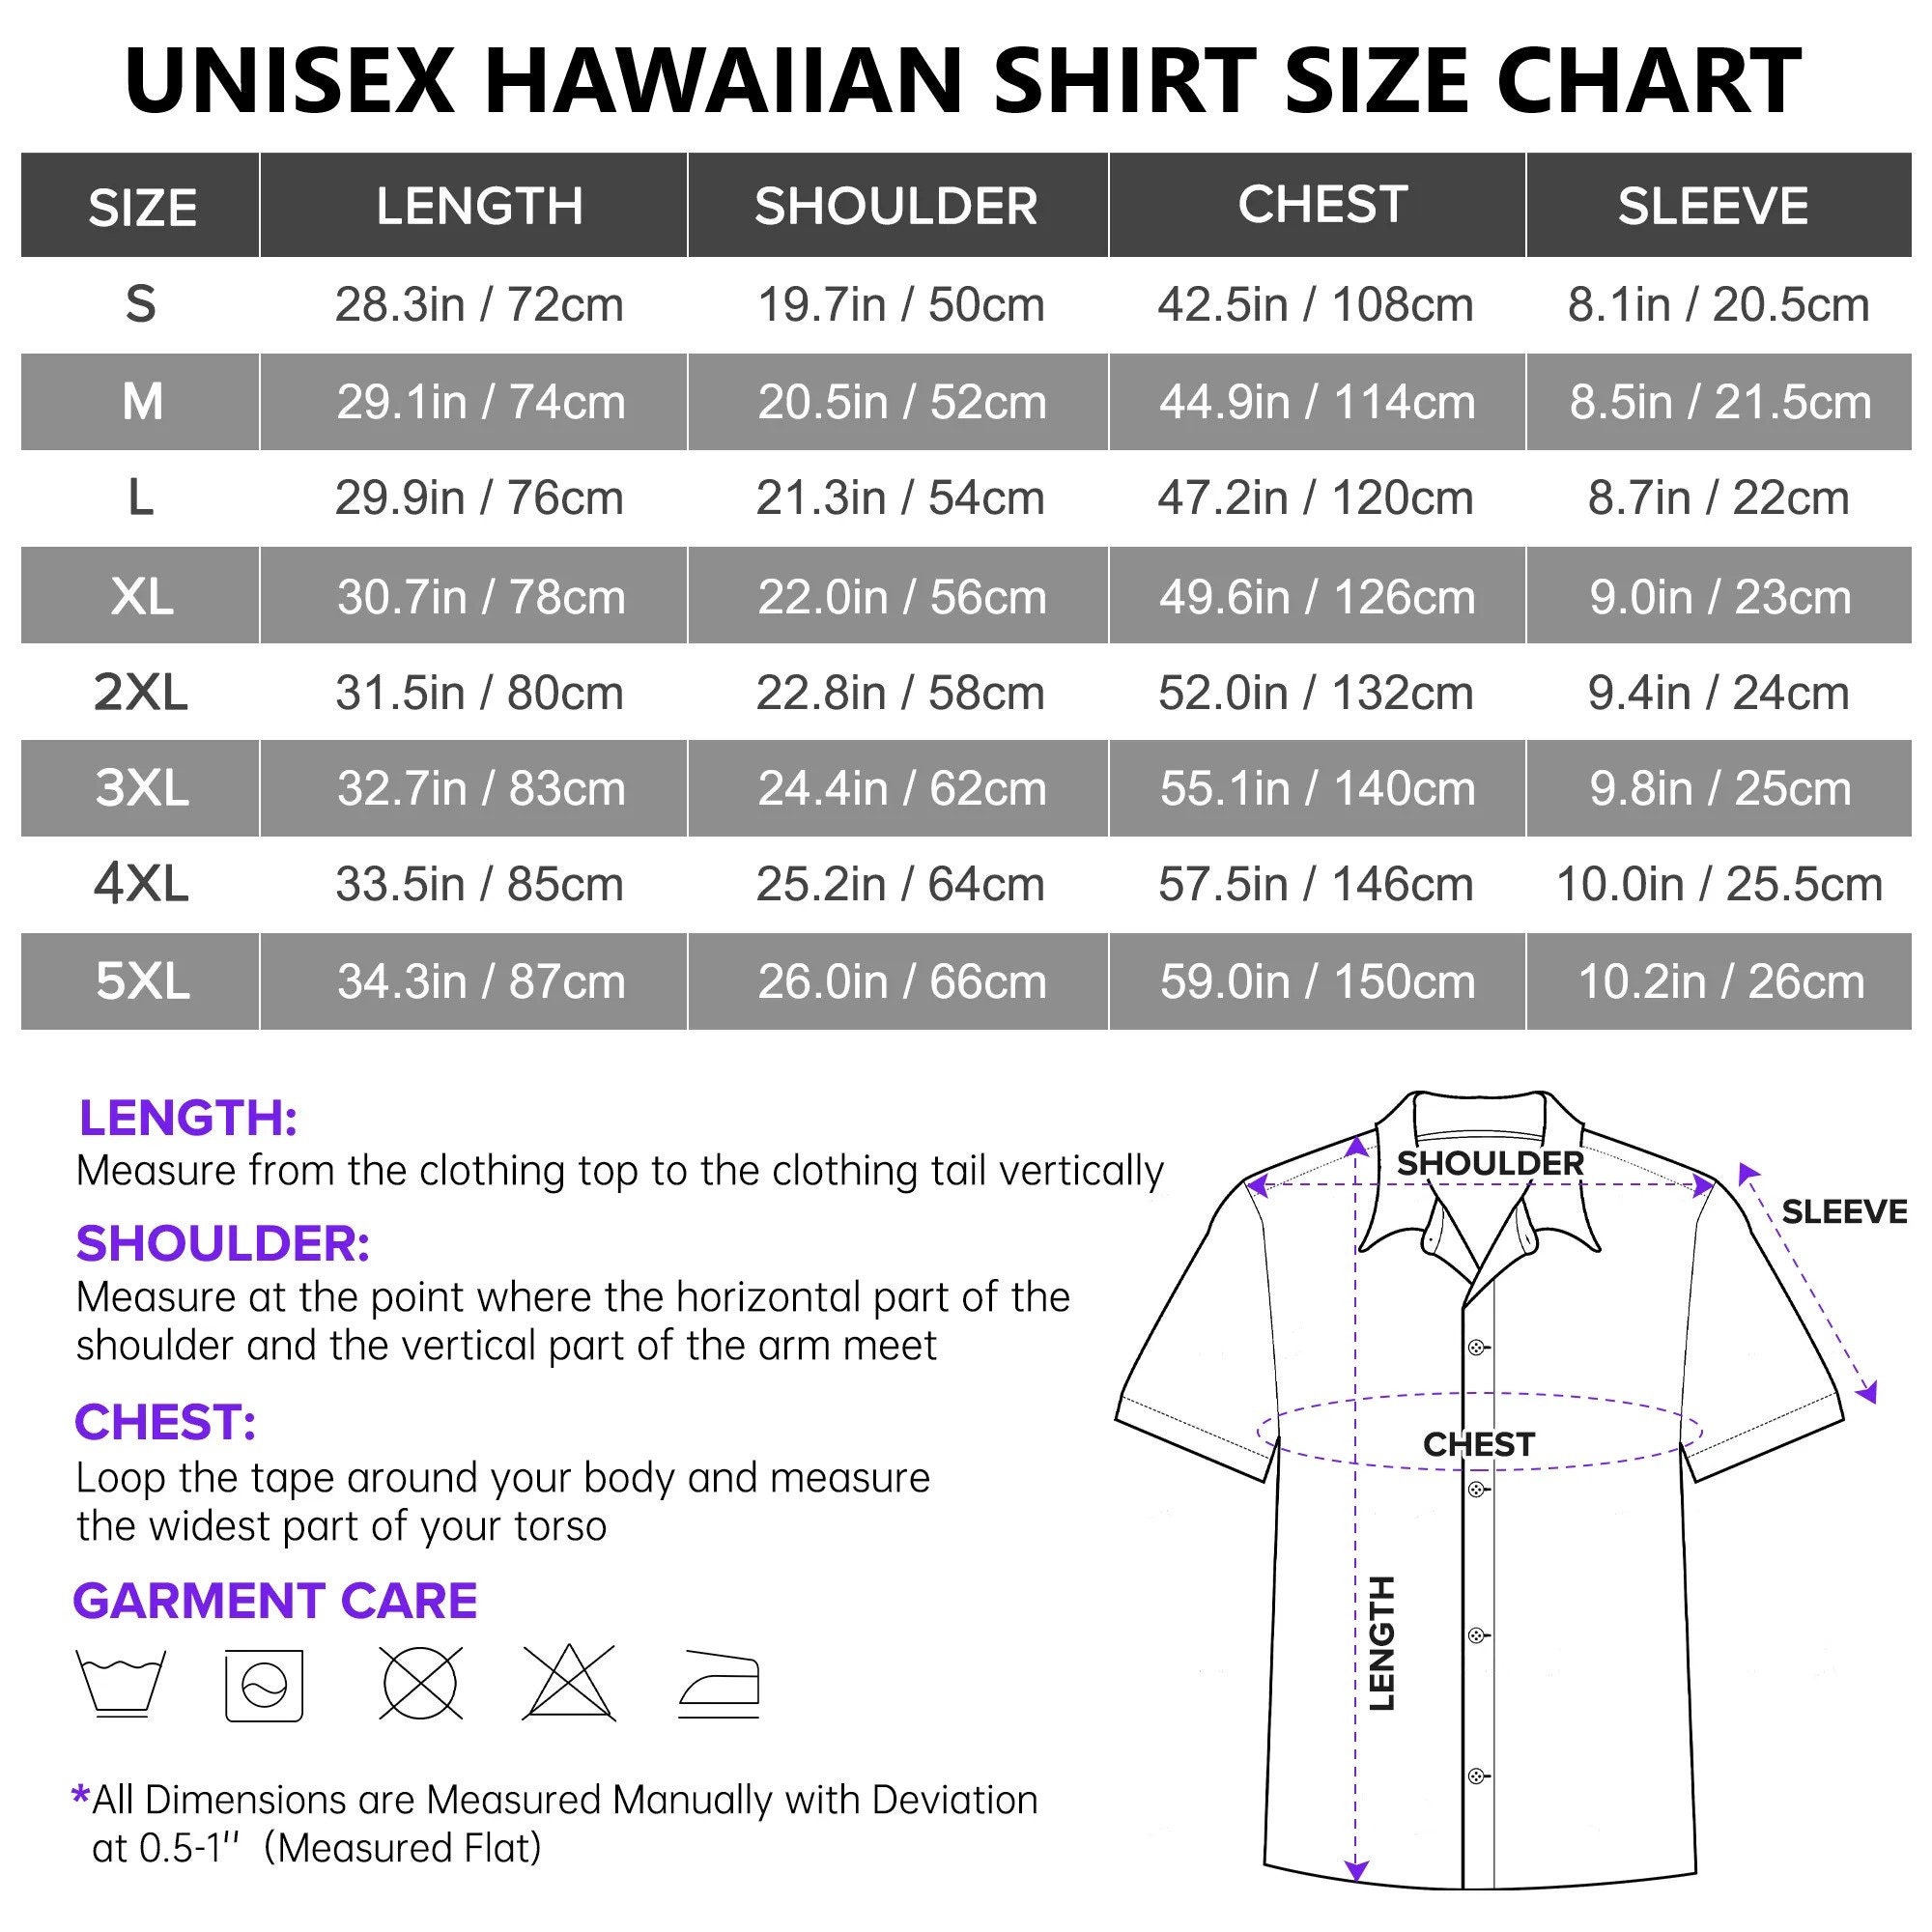 Discover Star Mouse America Flag Hawaii Beach Shirt, Mouse Button Up Shirt Holiday, Cartoon Hawaiian Shirt Gift